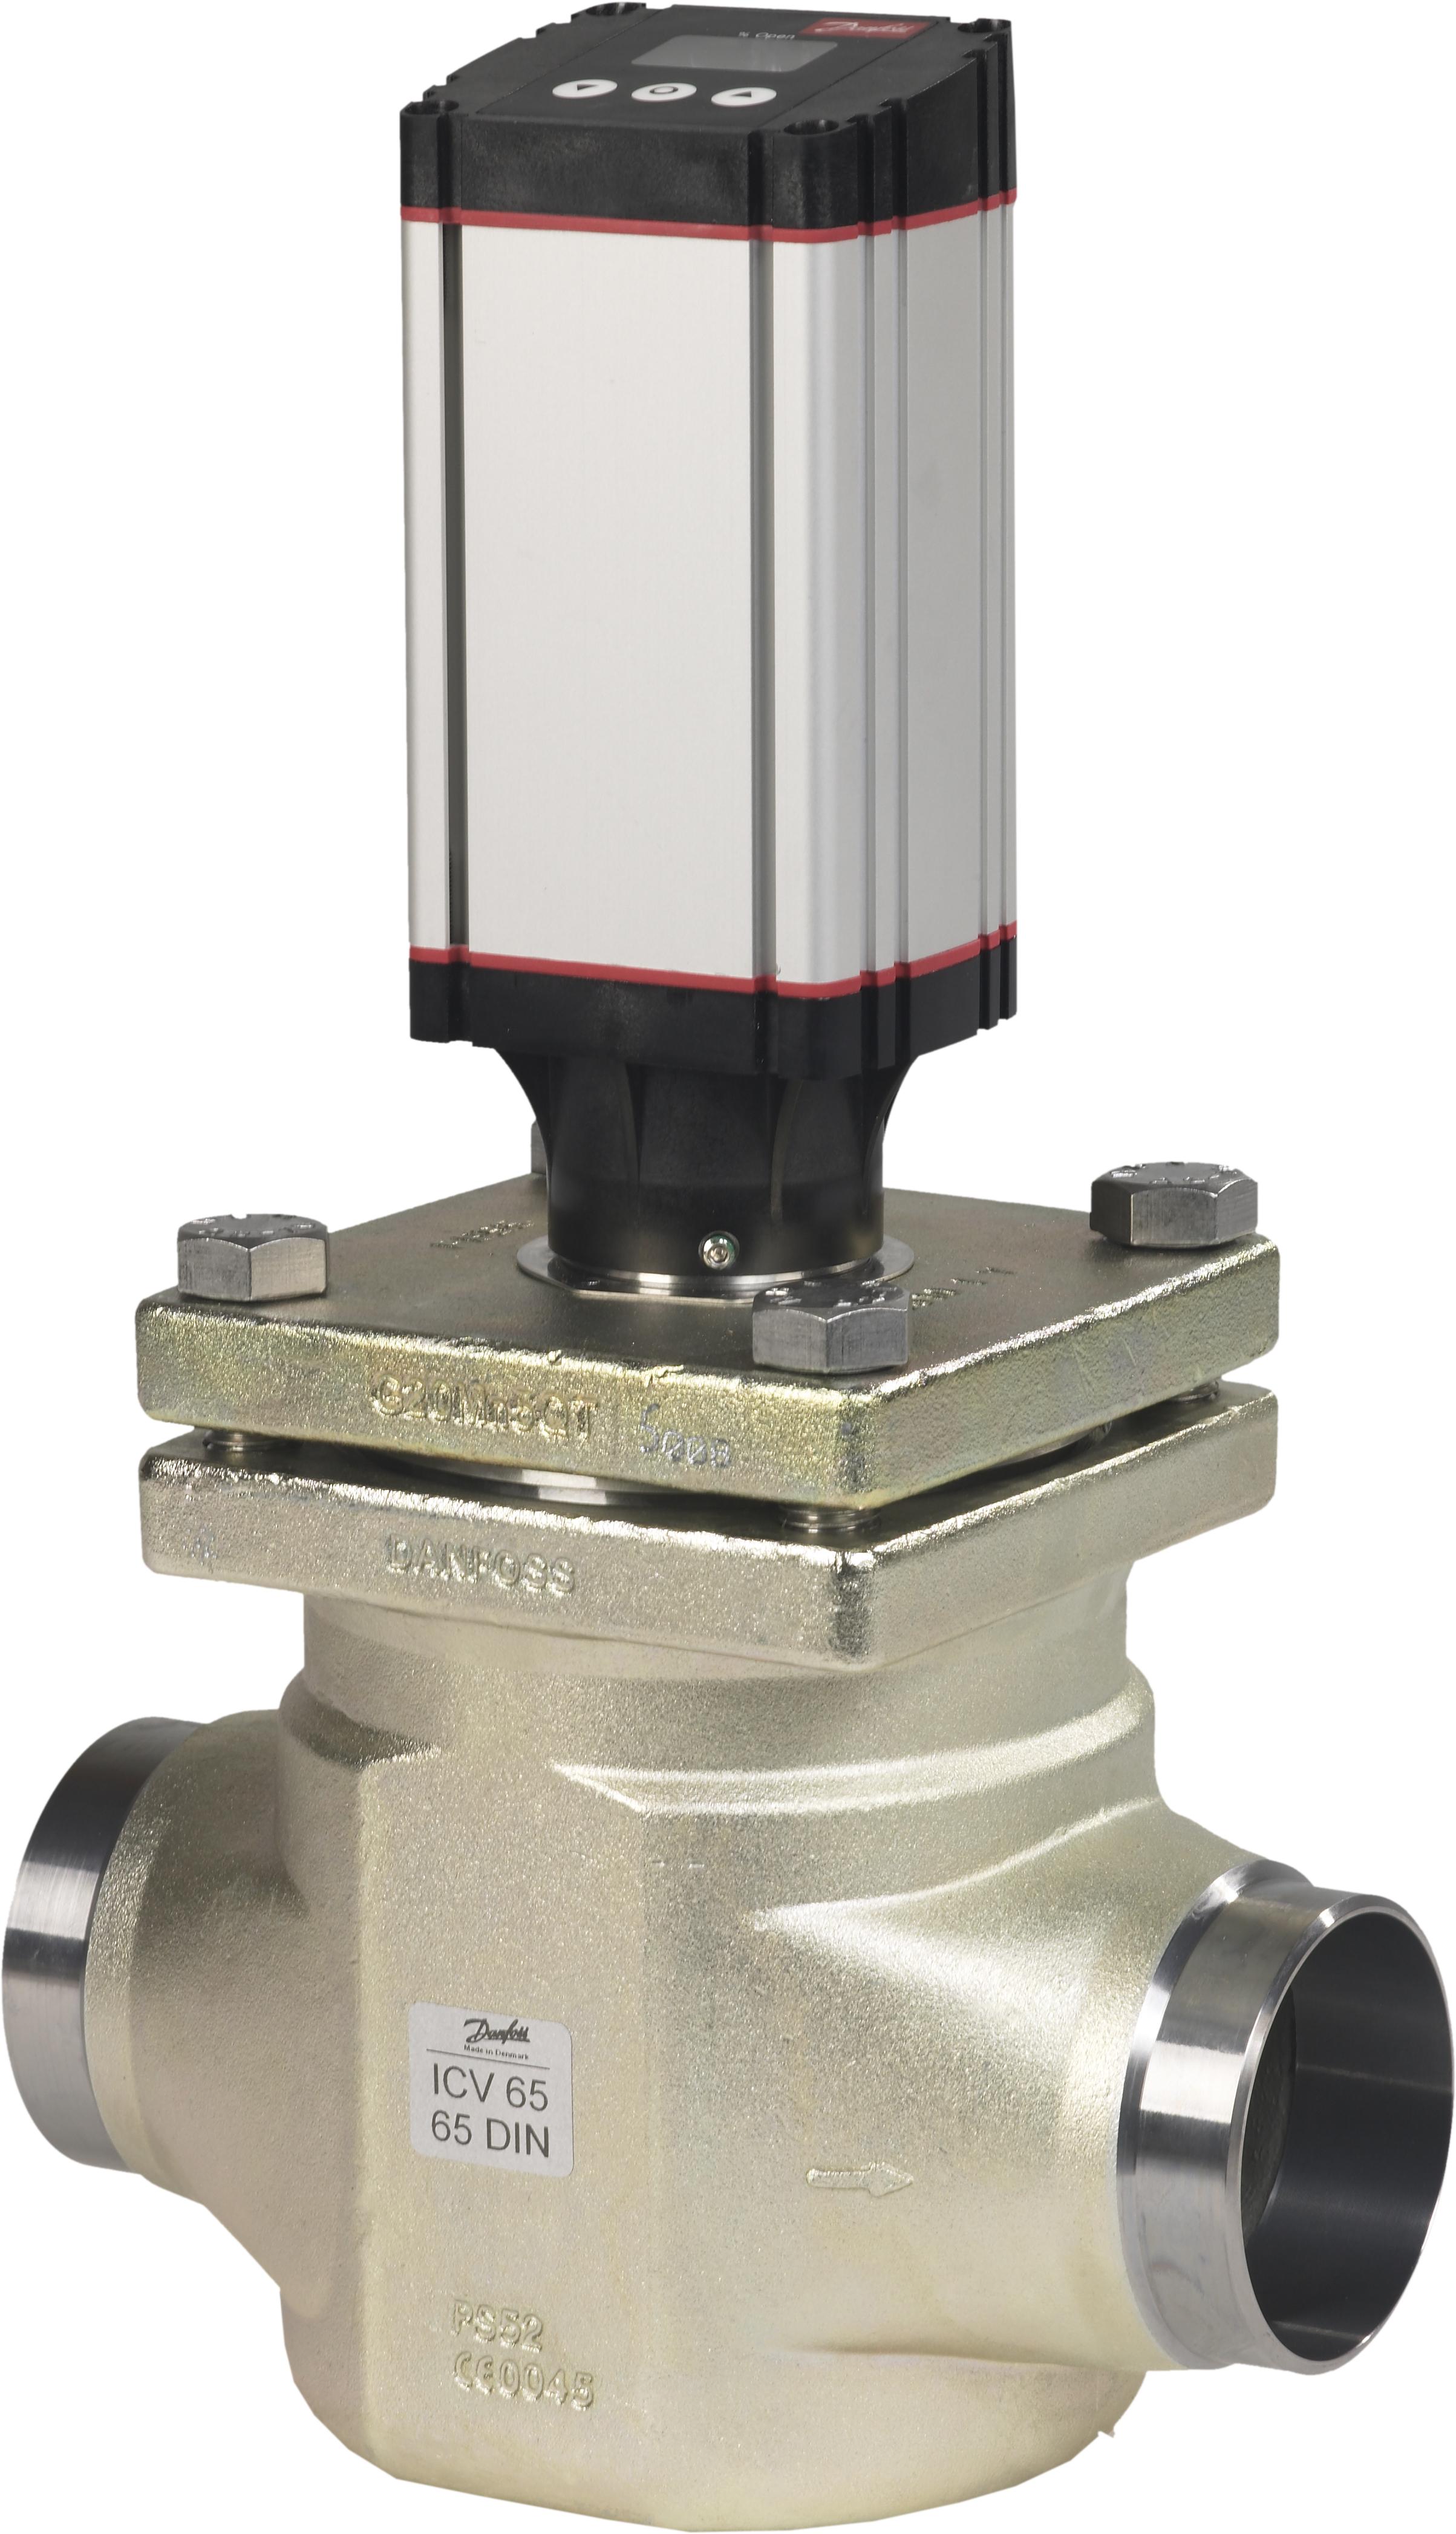 Motor operated valve, ICM 40-A, Steel